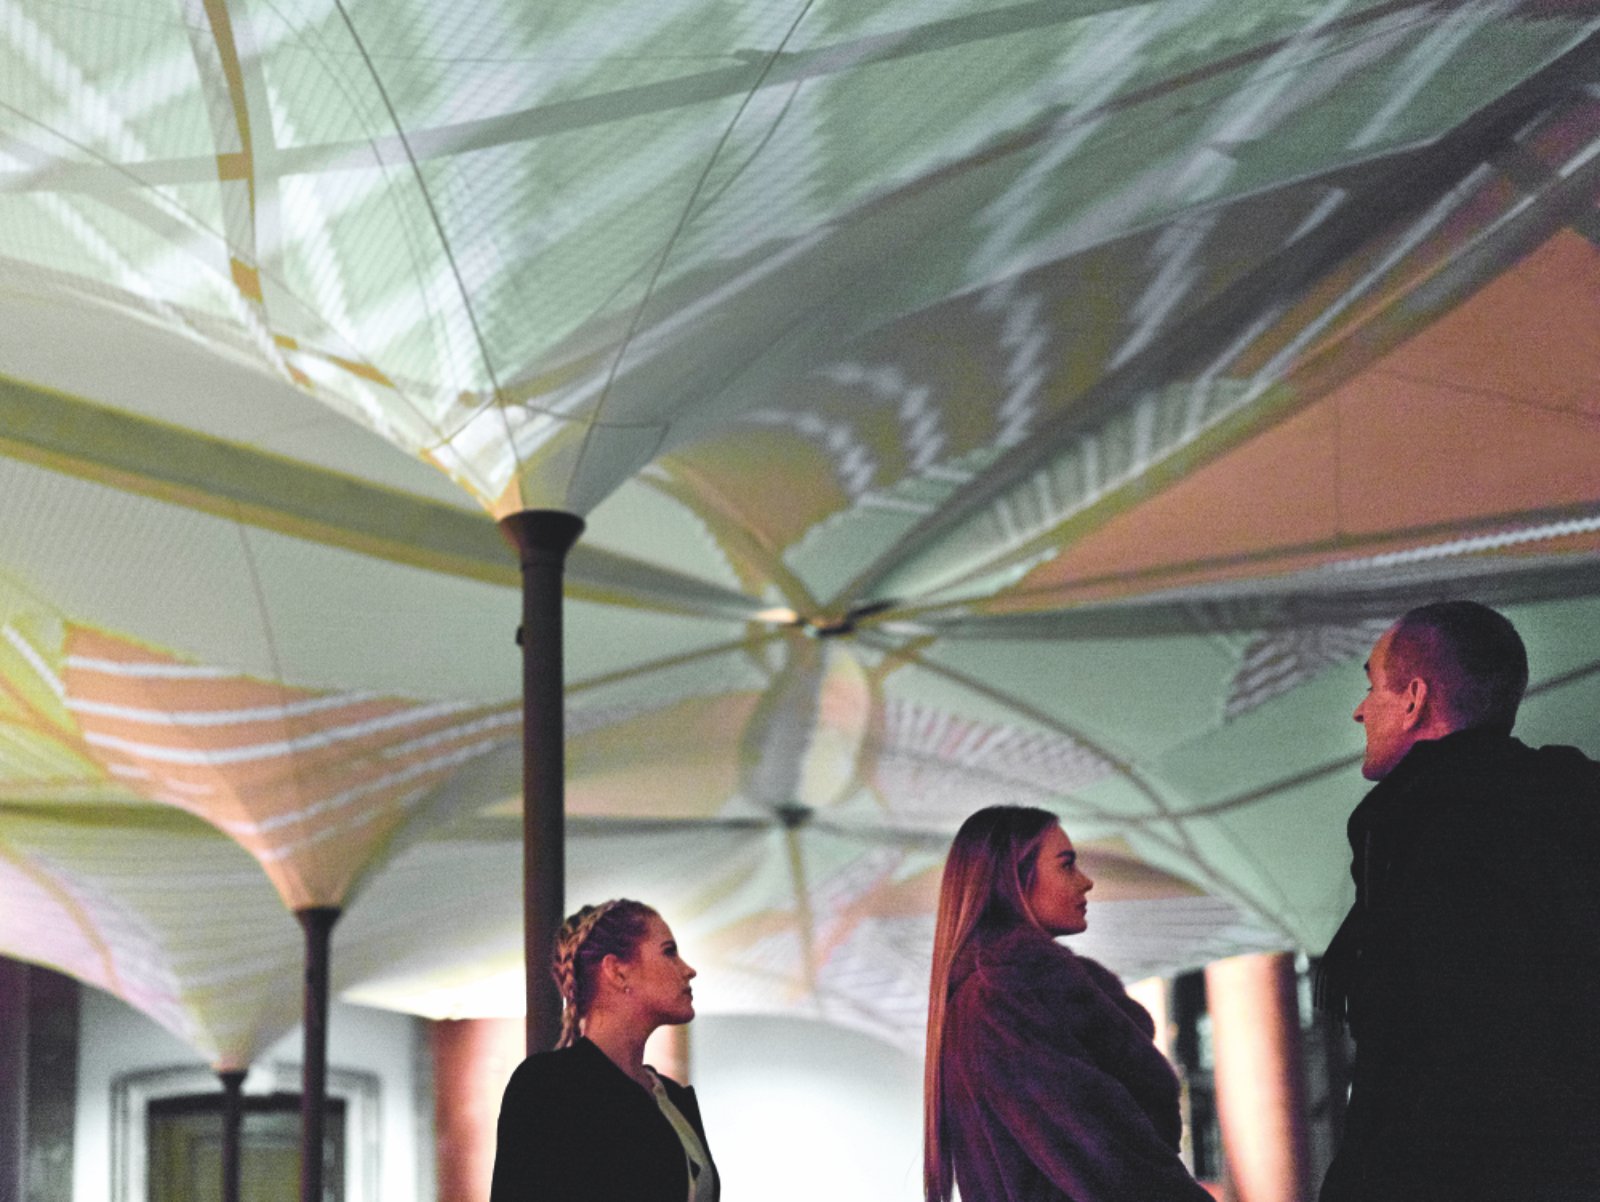 canopy system at Frankfurt design festival